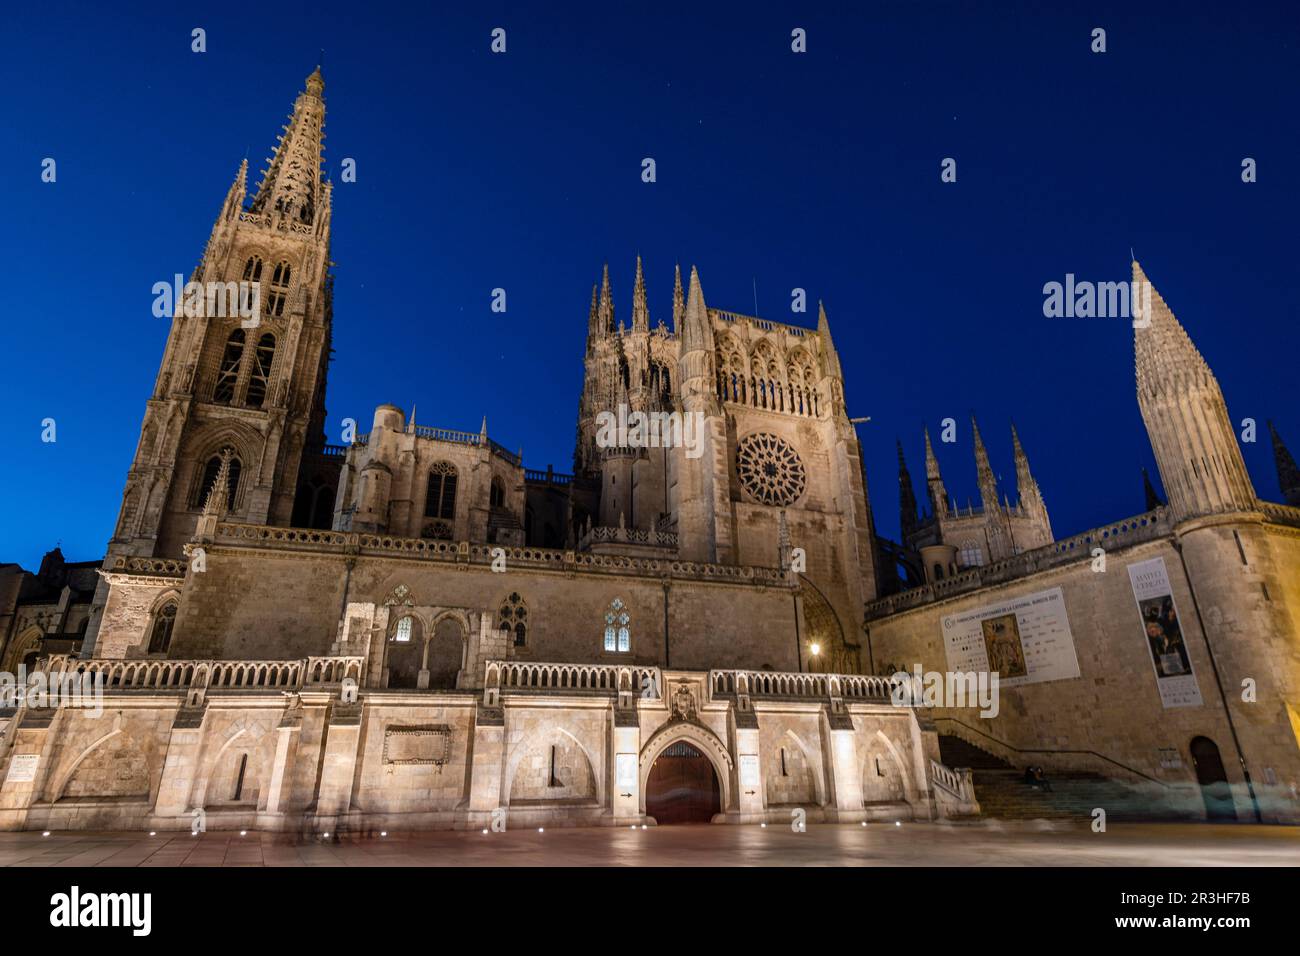 Burgos cathedral, Santa Iglesia Catedral Basílica Metropolitana de Santa María, Burgos province, Spain. Stock Photo